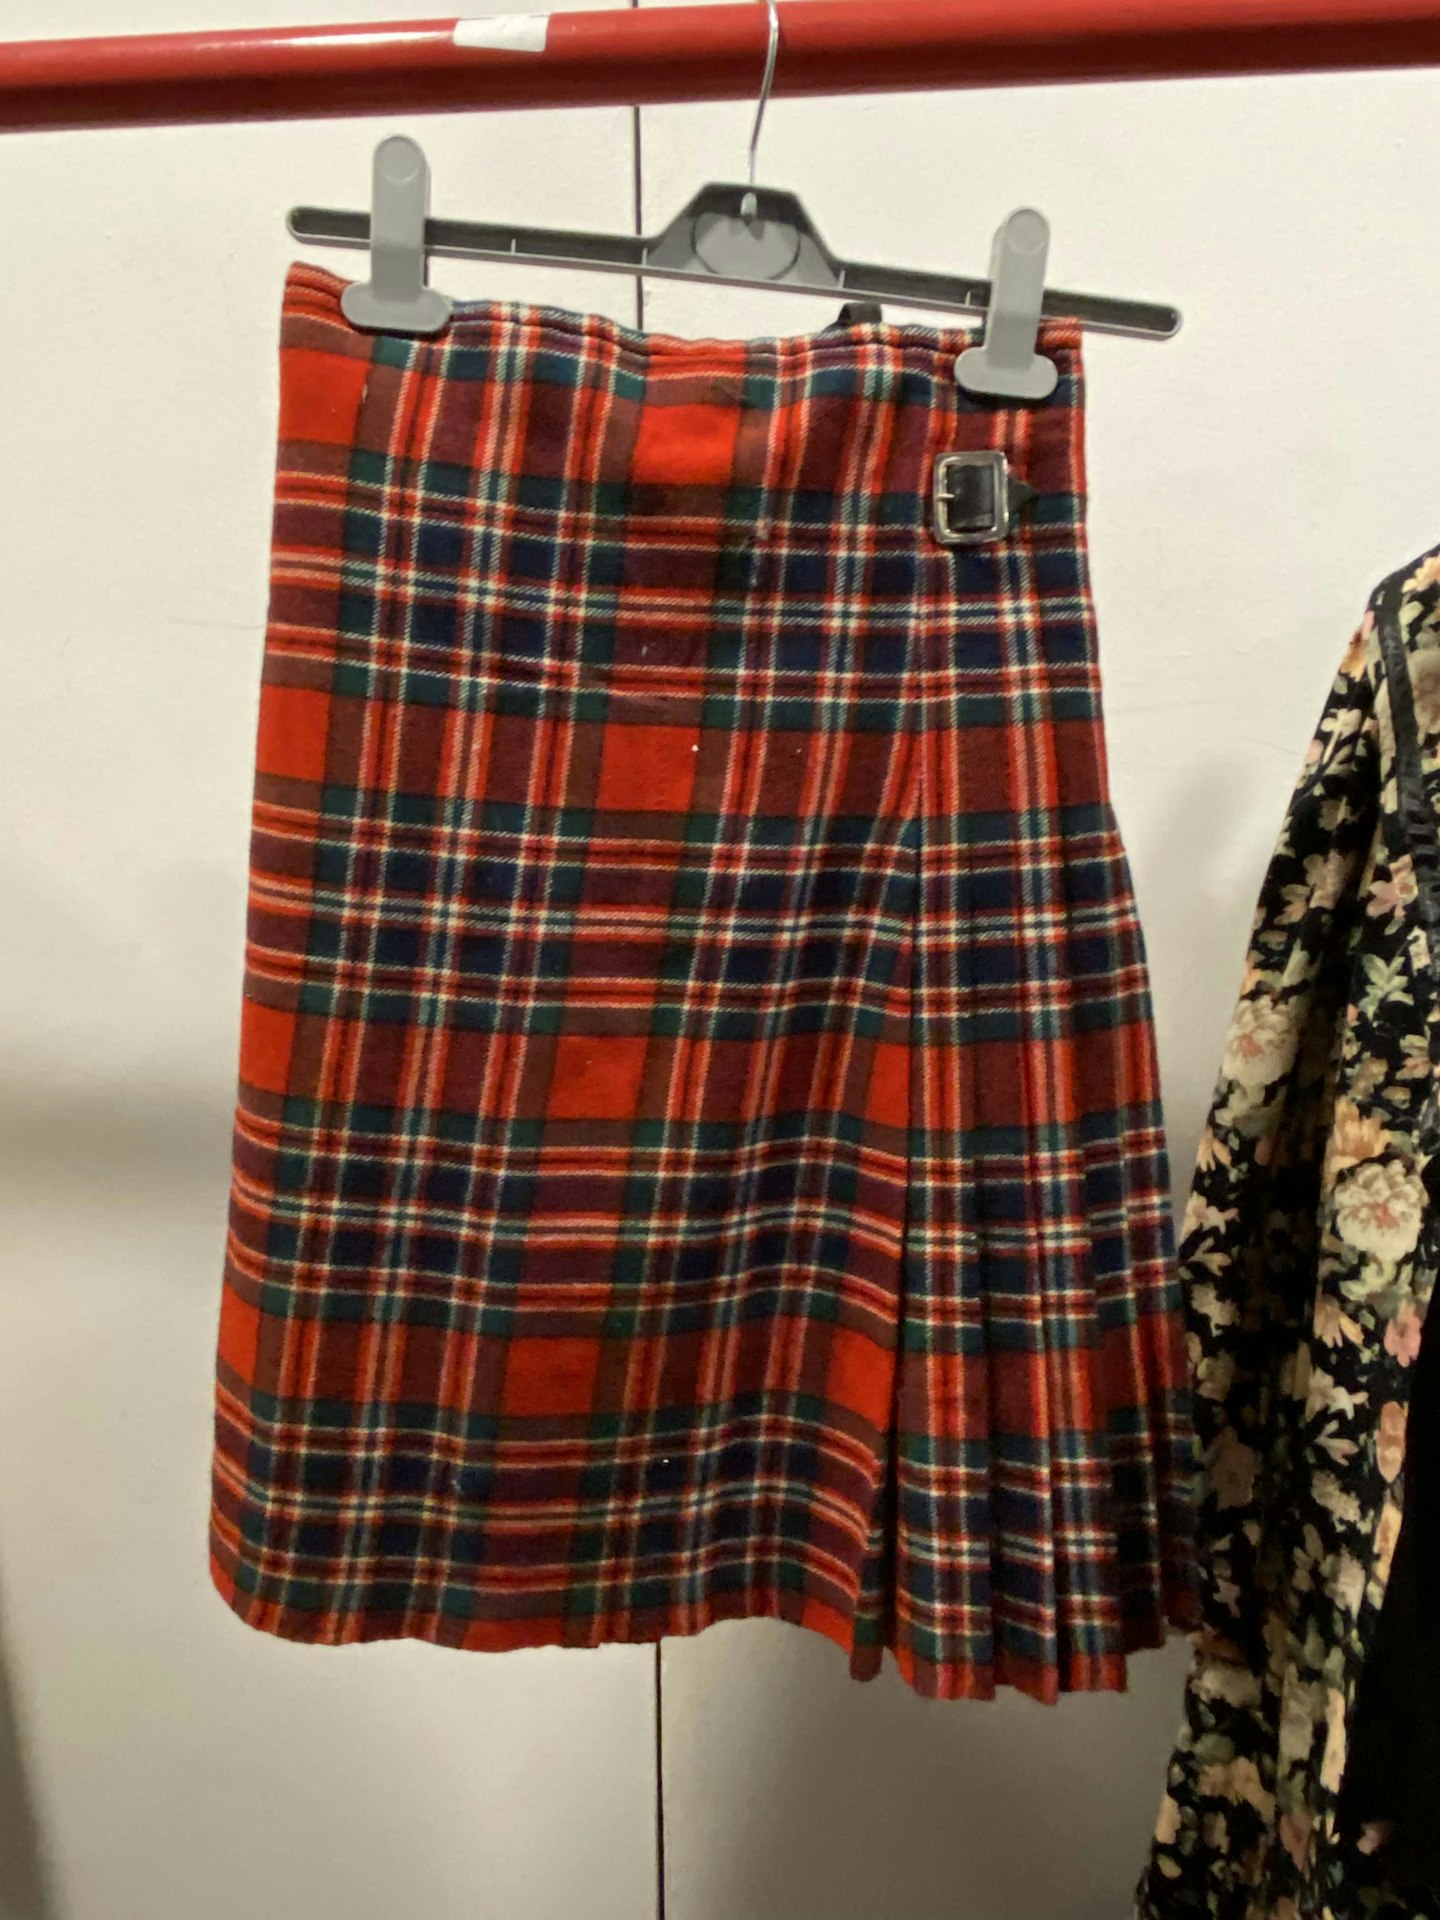 A tartan skirt chosen by Chloë Sevigny